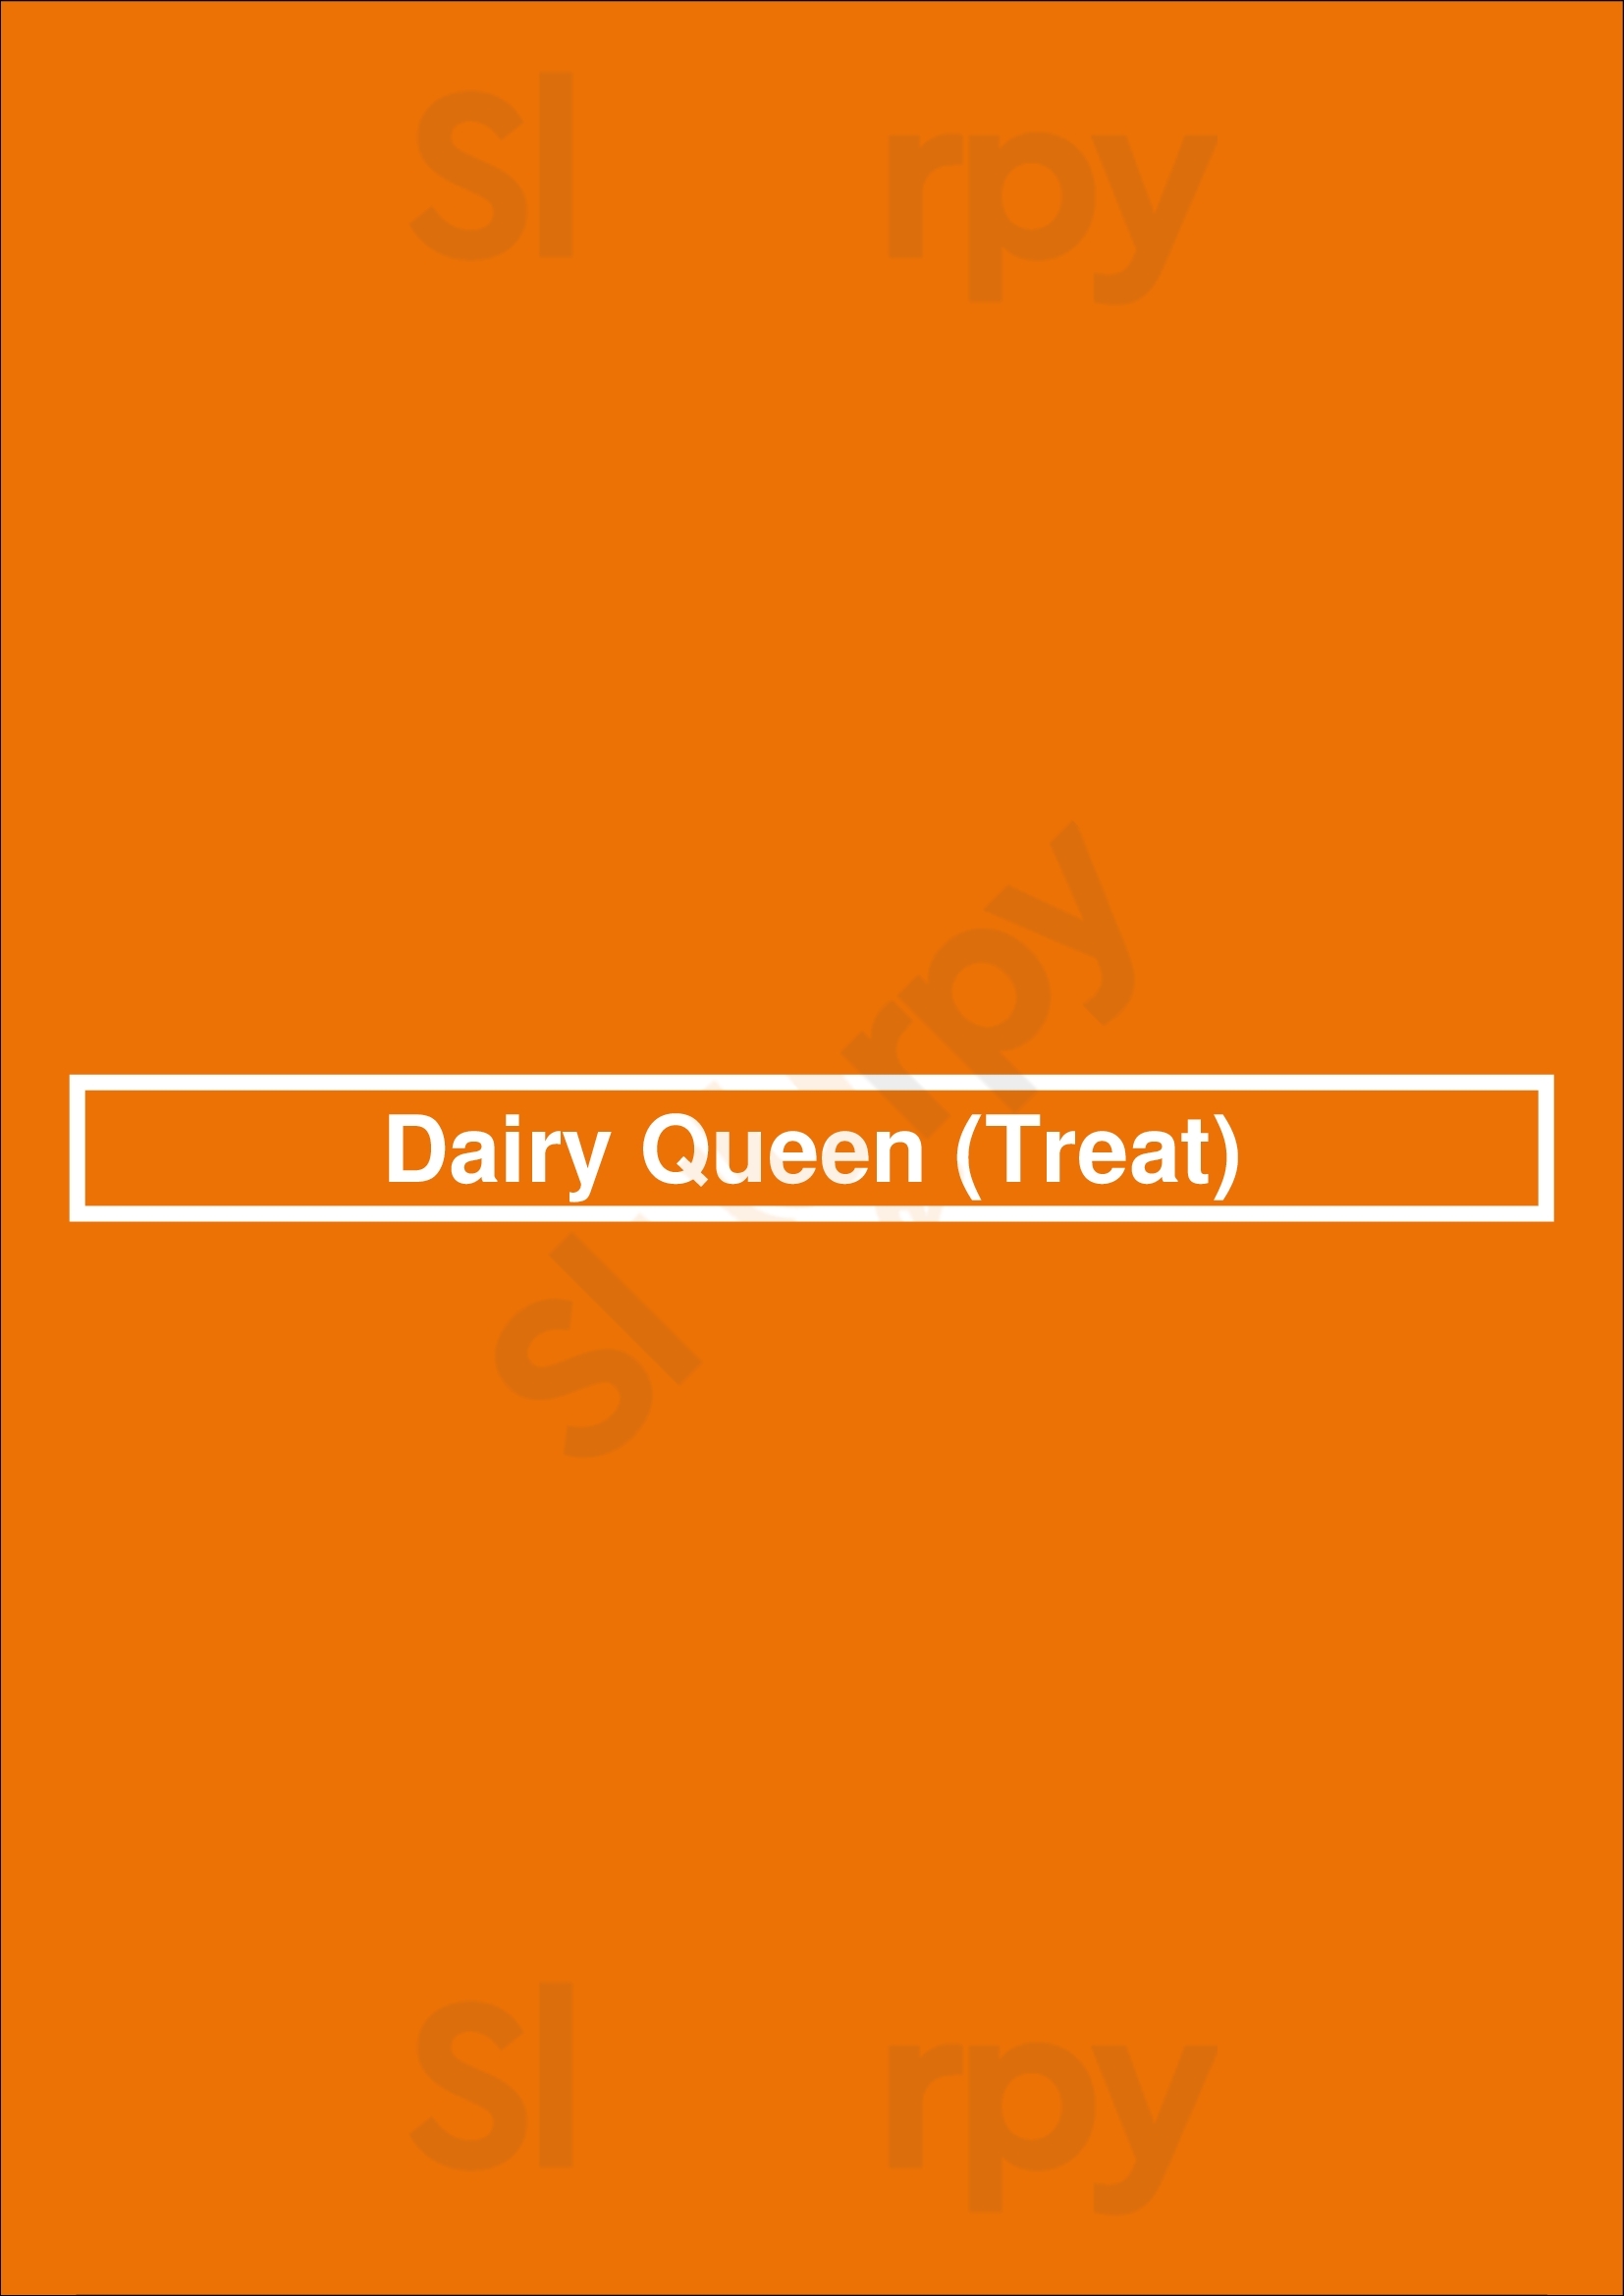 Dairy Queen (treat) Detroit Menu - 1